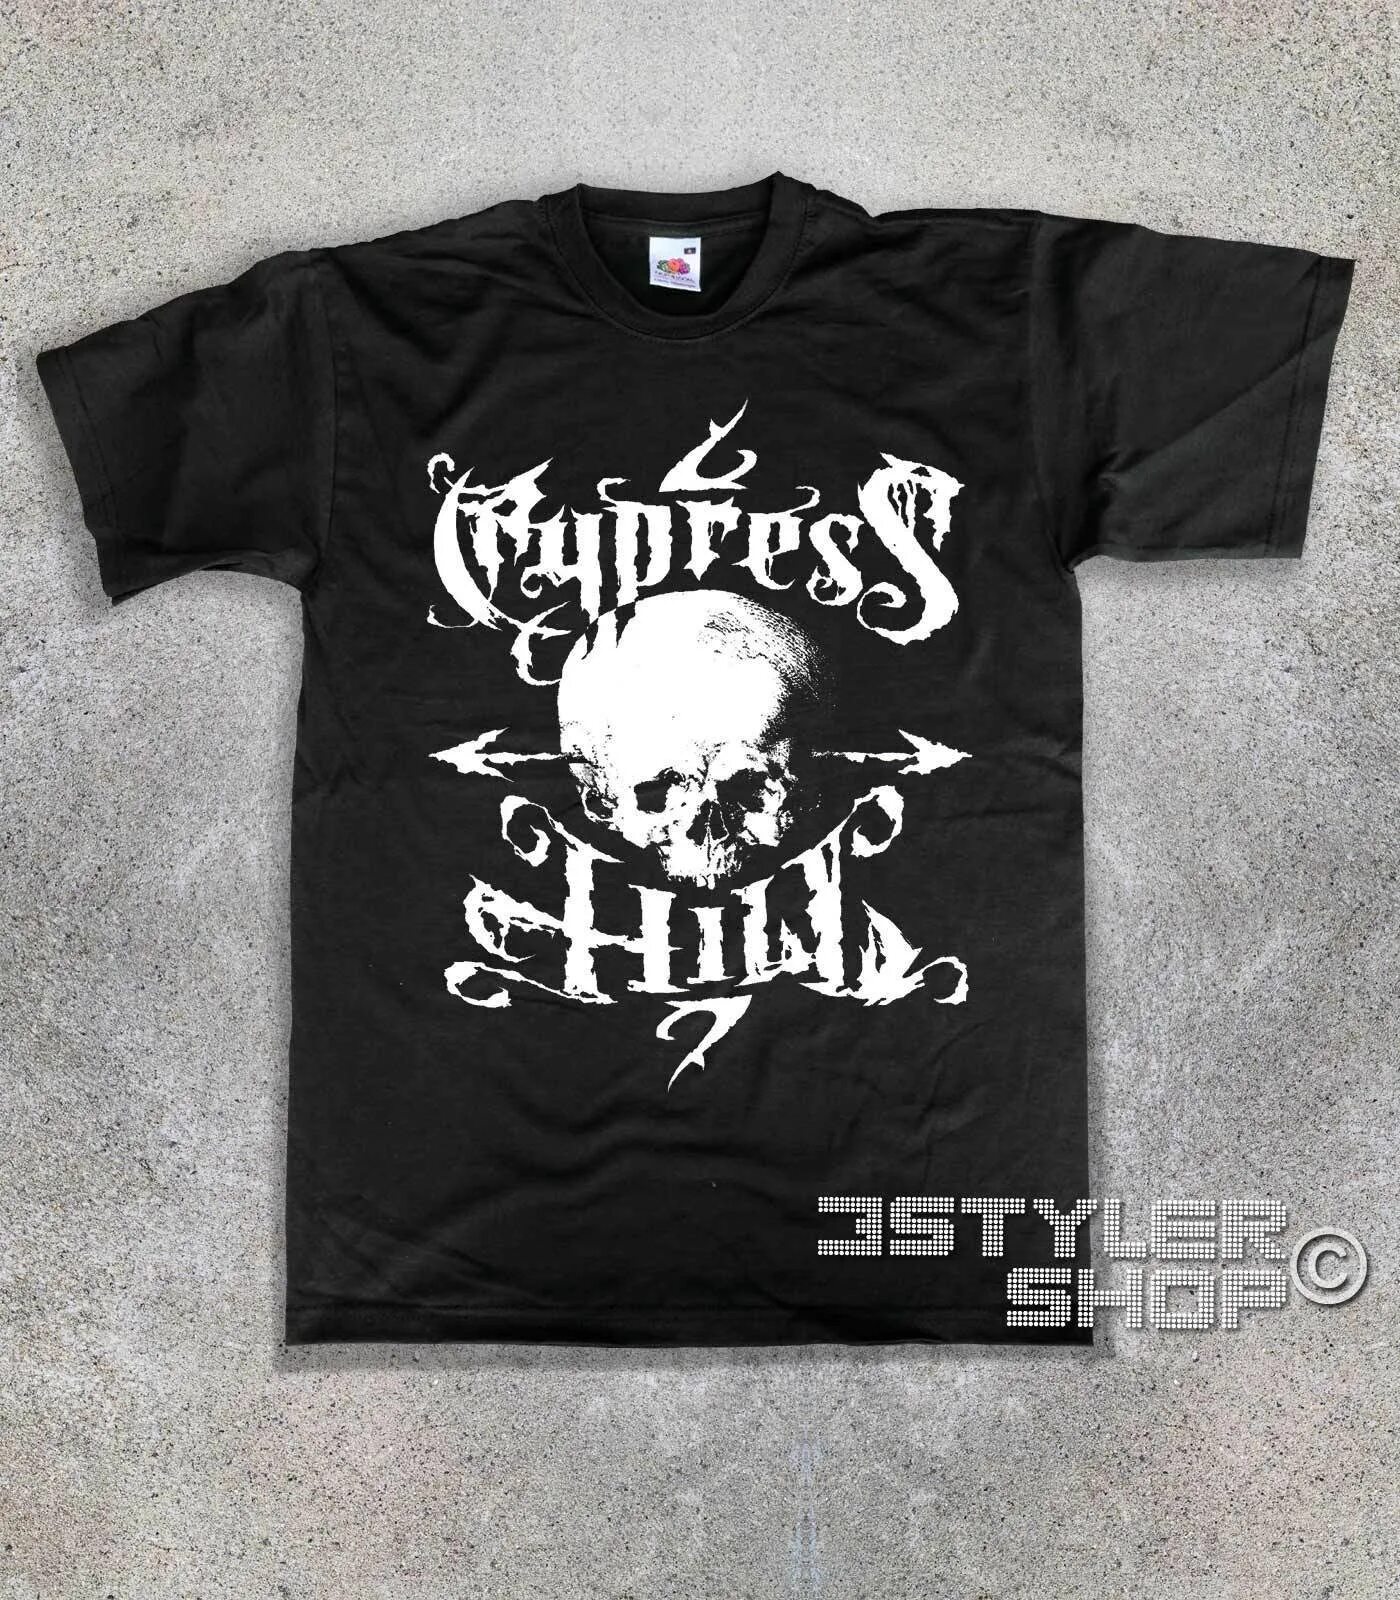 Футболка Сайпресс Хилл. The great Hill футболка. Cypress Hill фото. Insane in the Brain Cypress Hill обложка. Cypress hill insane in the brain